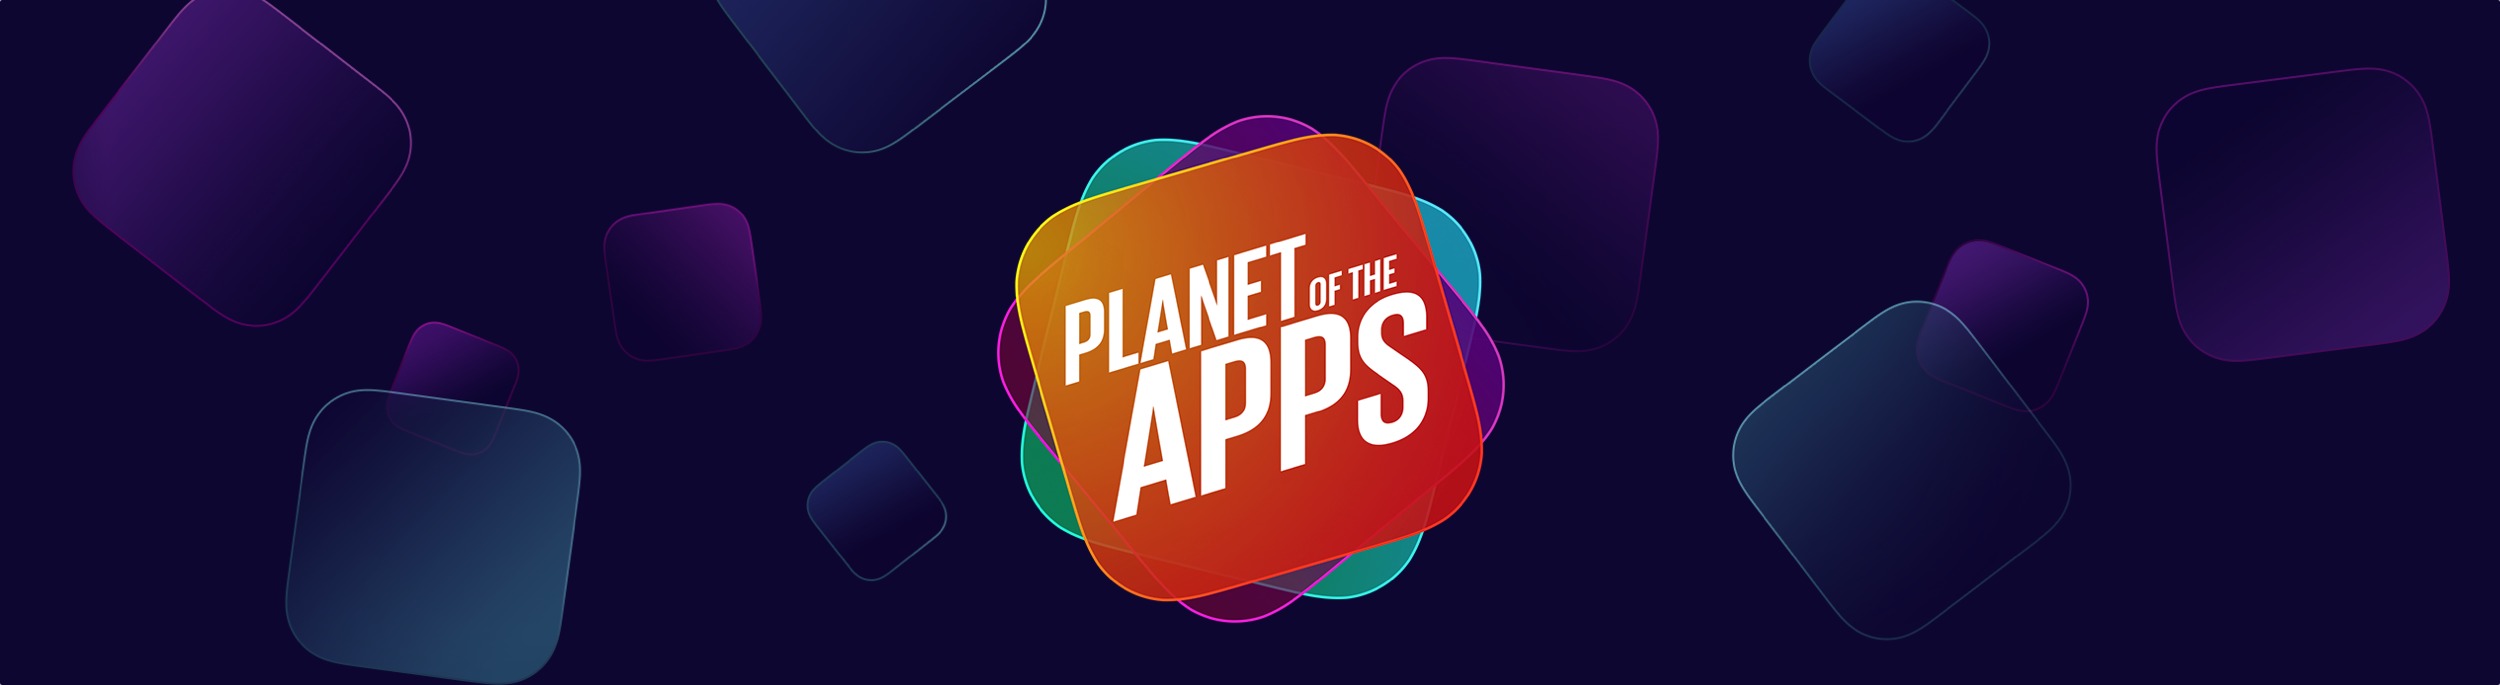 Planet of the Apps en Apple Music